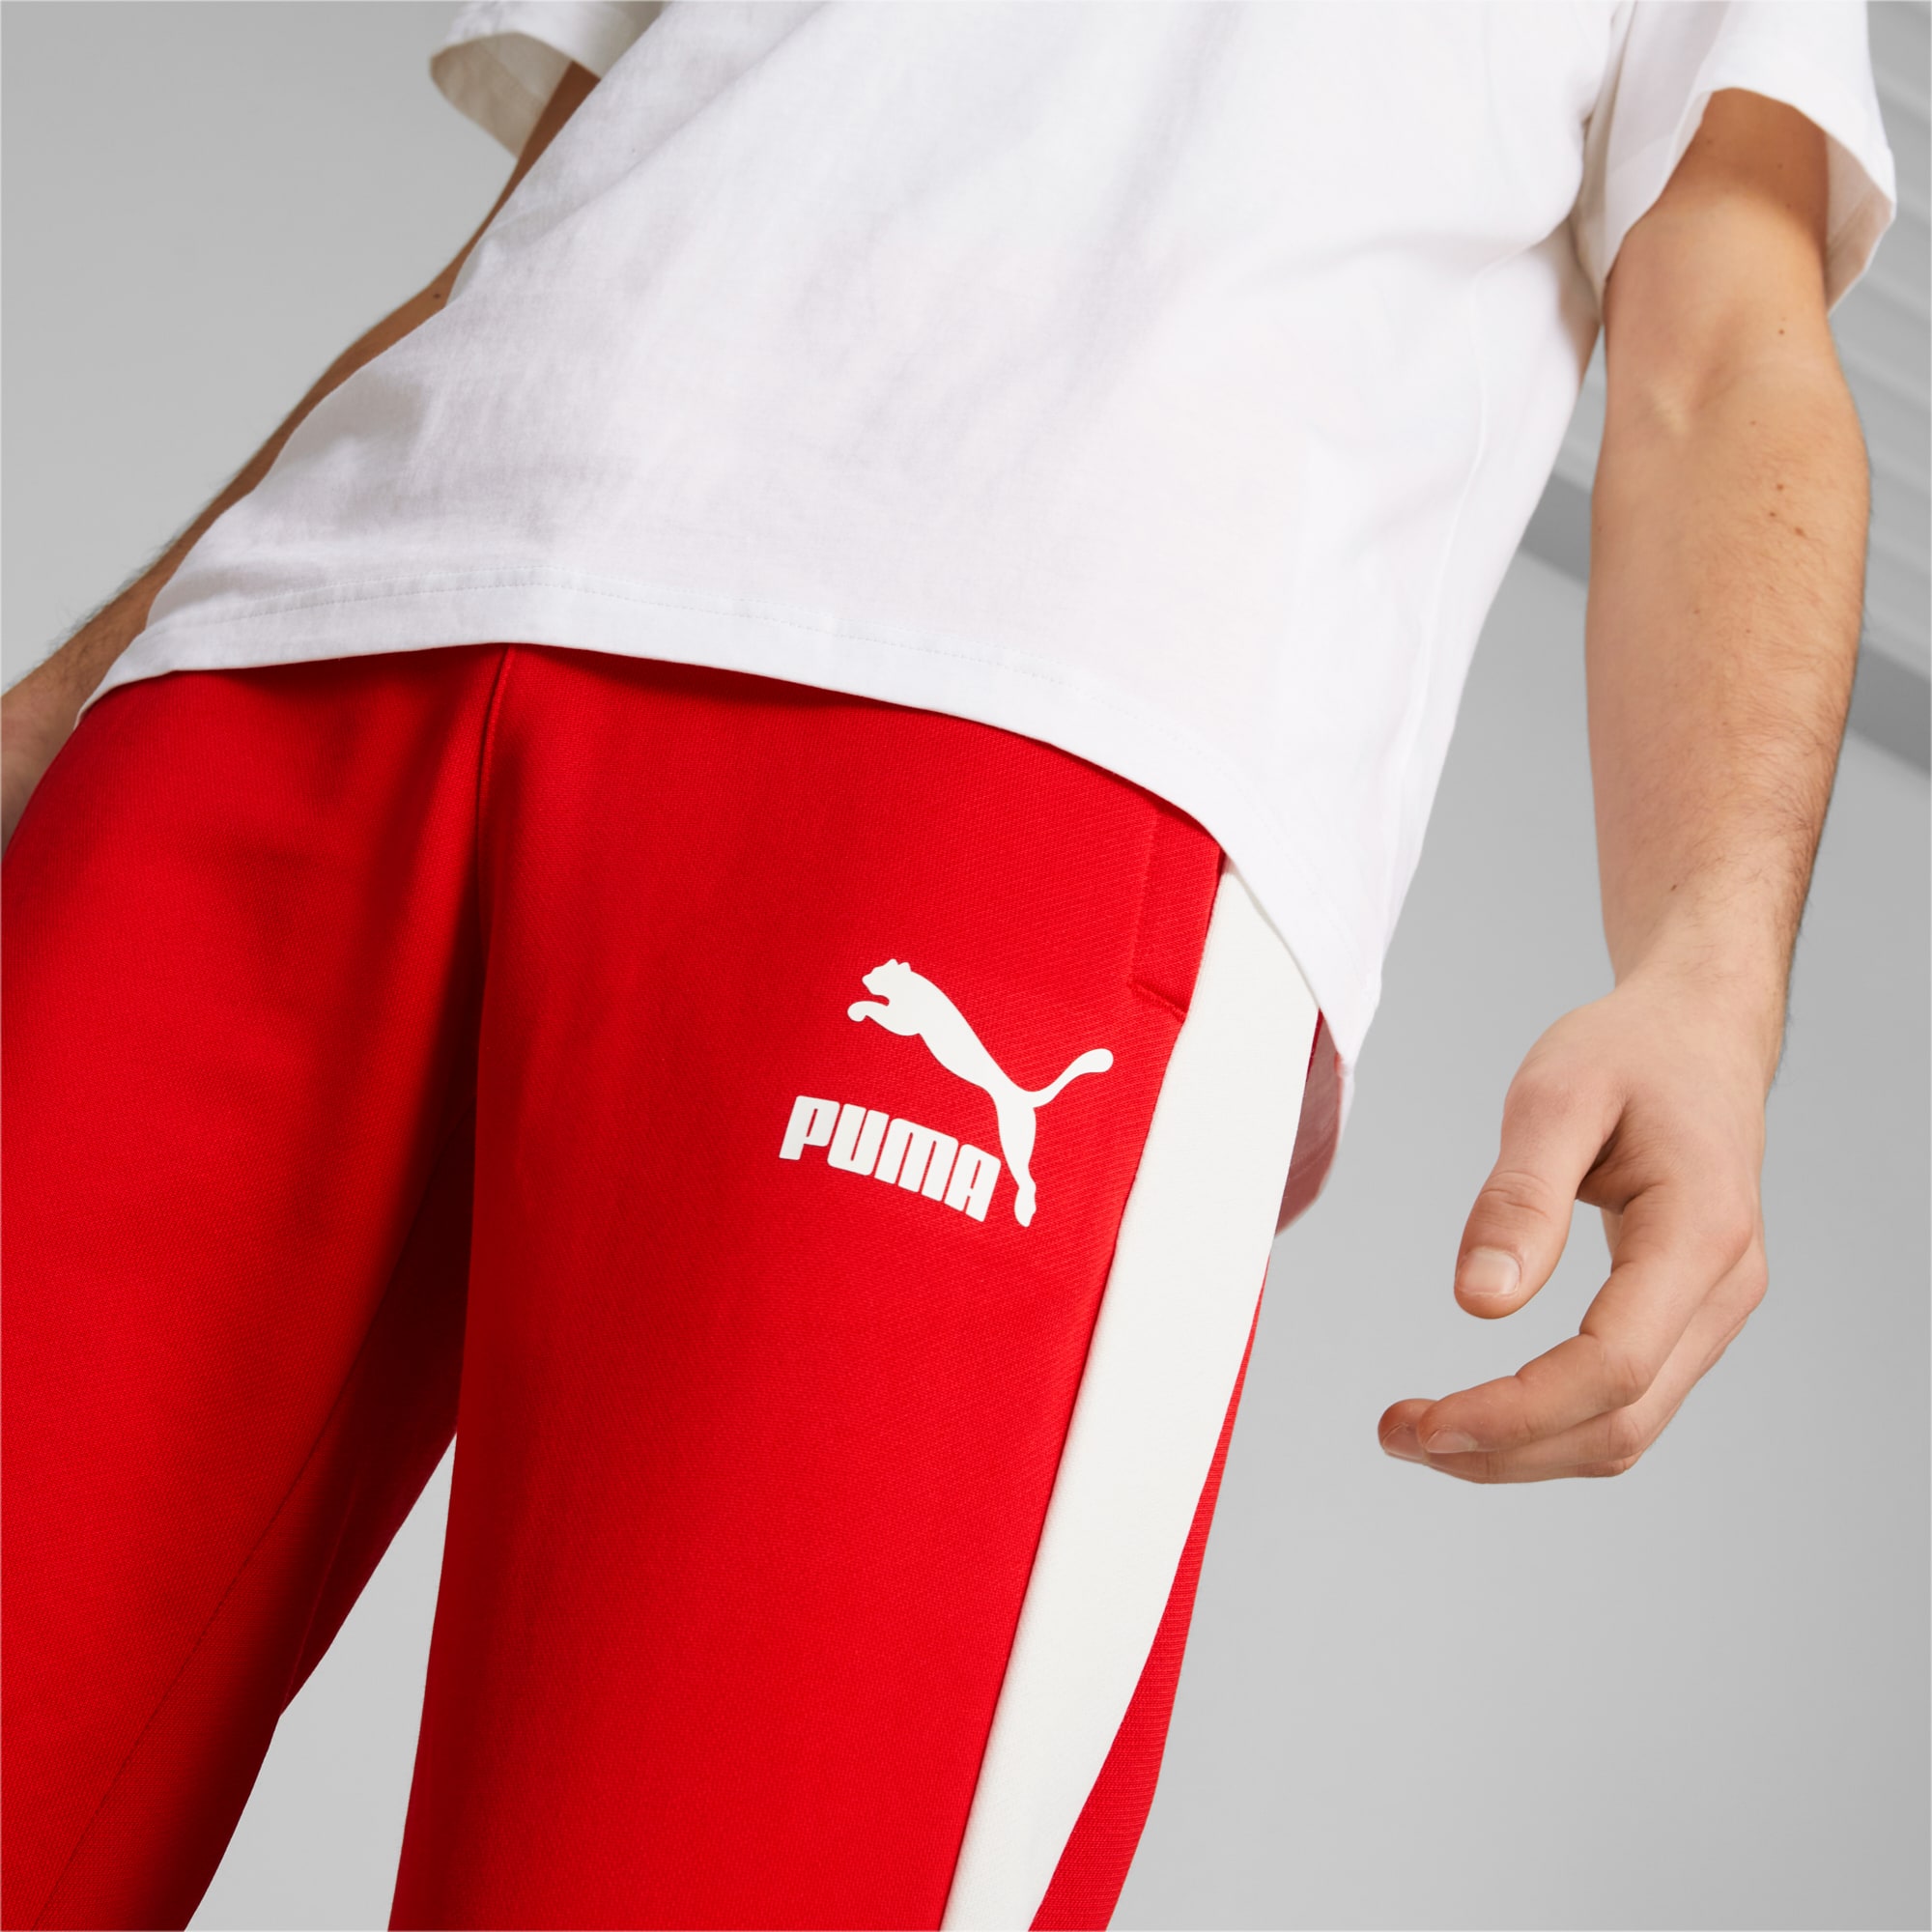 PUMA Iconic T7 Herren Trainingshose, Rot, Größe: L, Kleidung